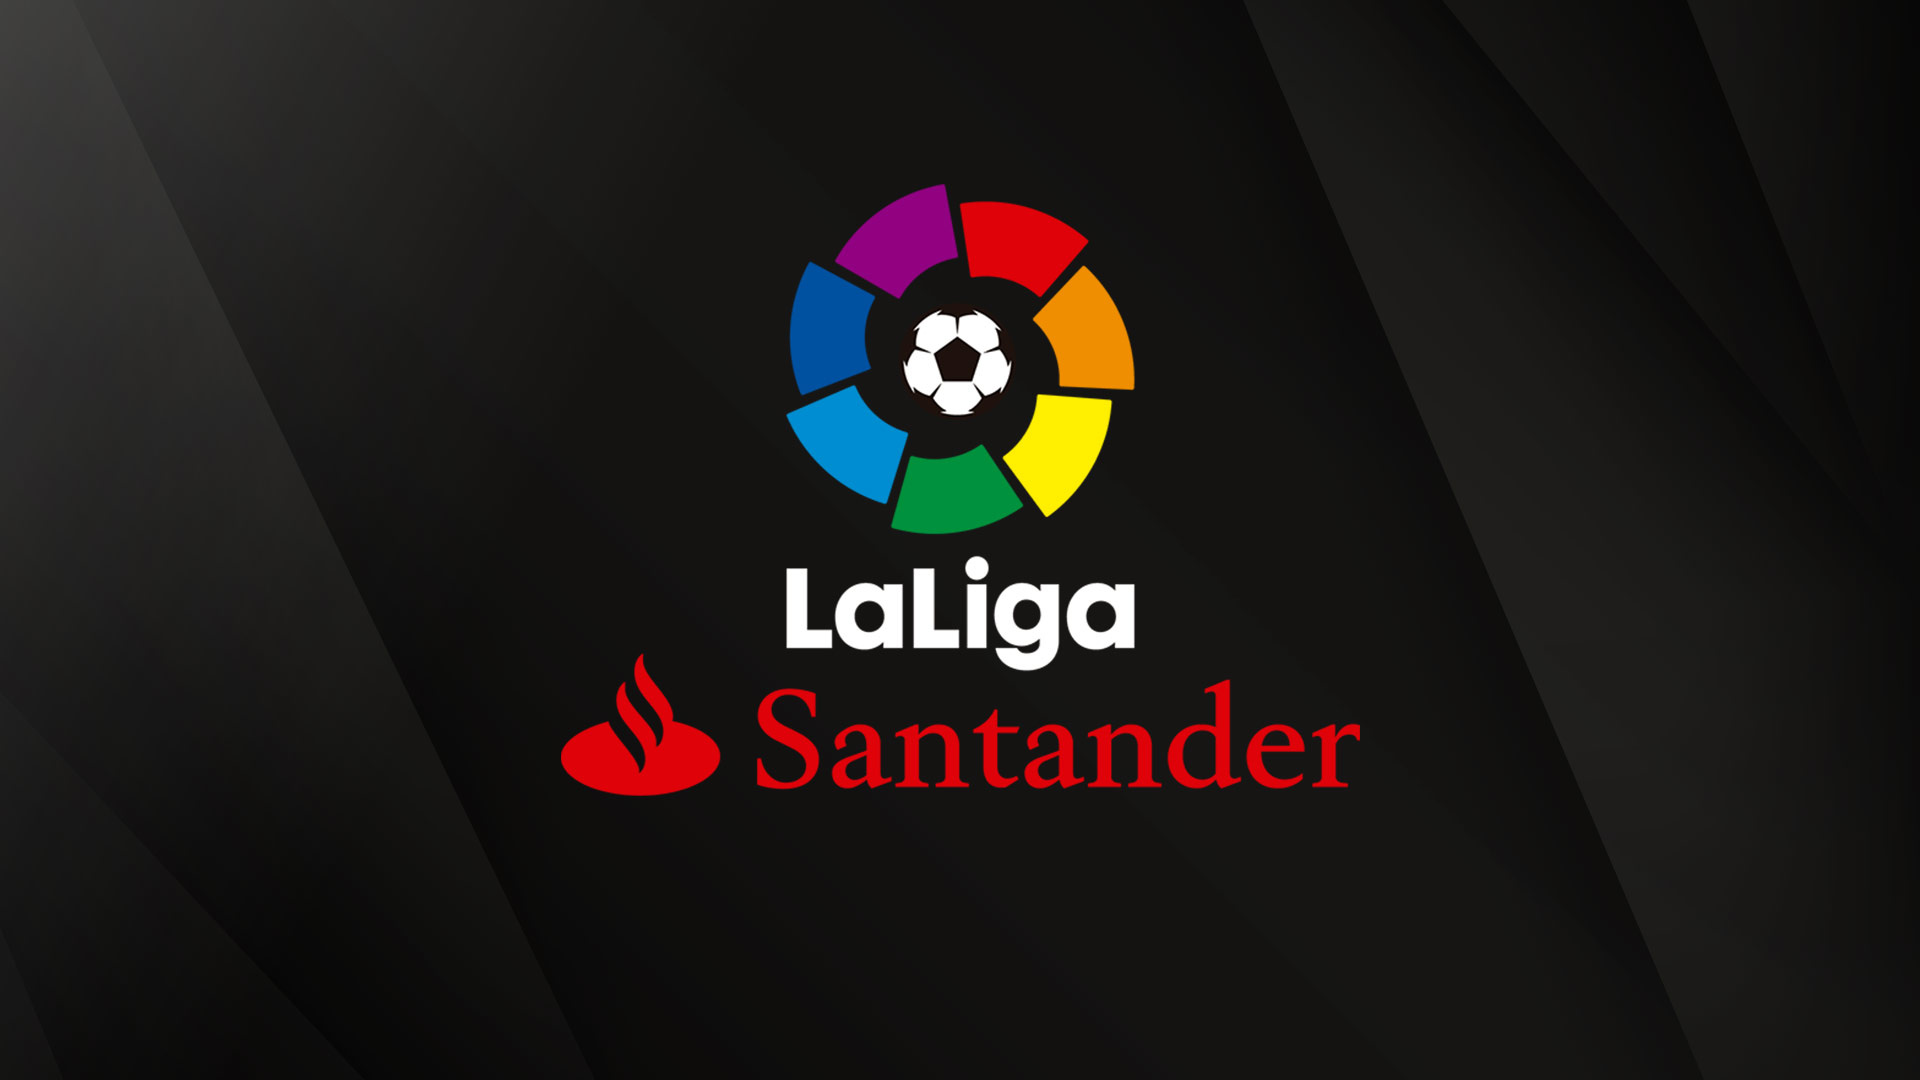 Laliga Santander wallpapers, Football passion, Team dedication, Club pride, 1920x1080 Full HD Desktop